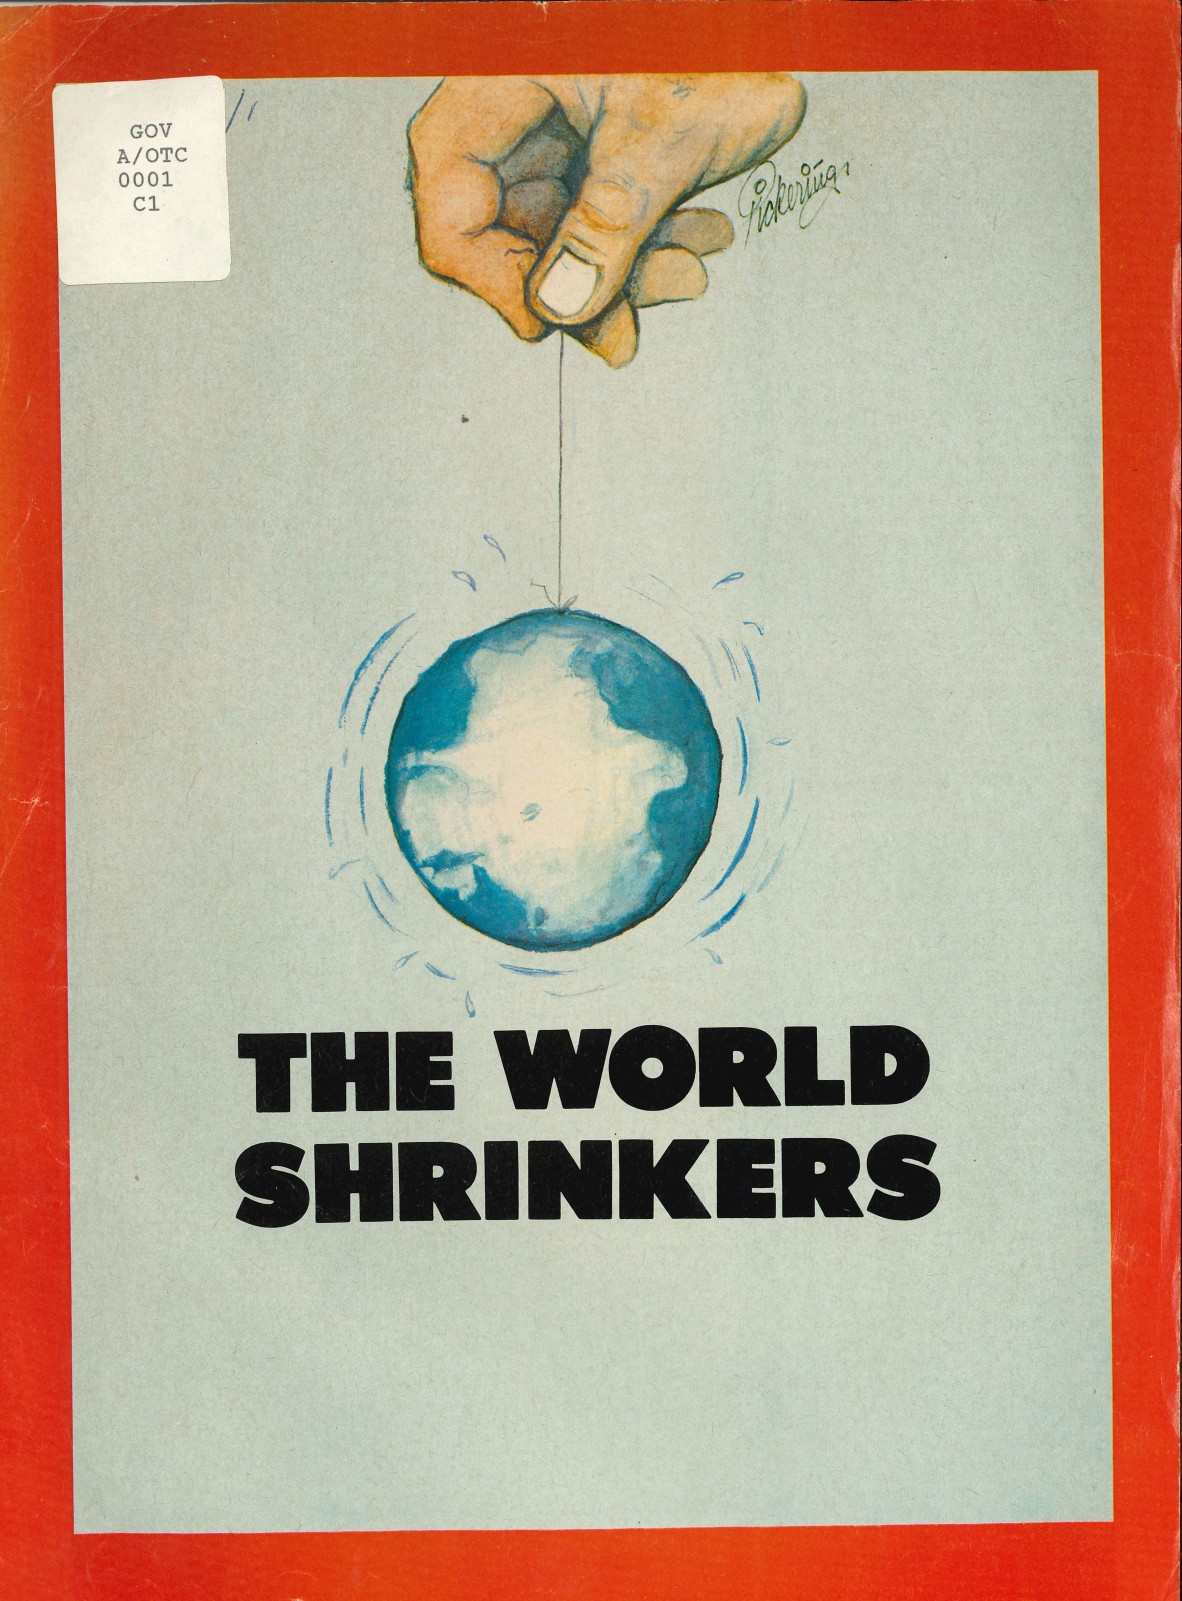 The world shrinkers.